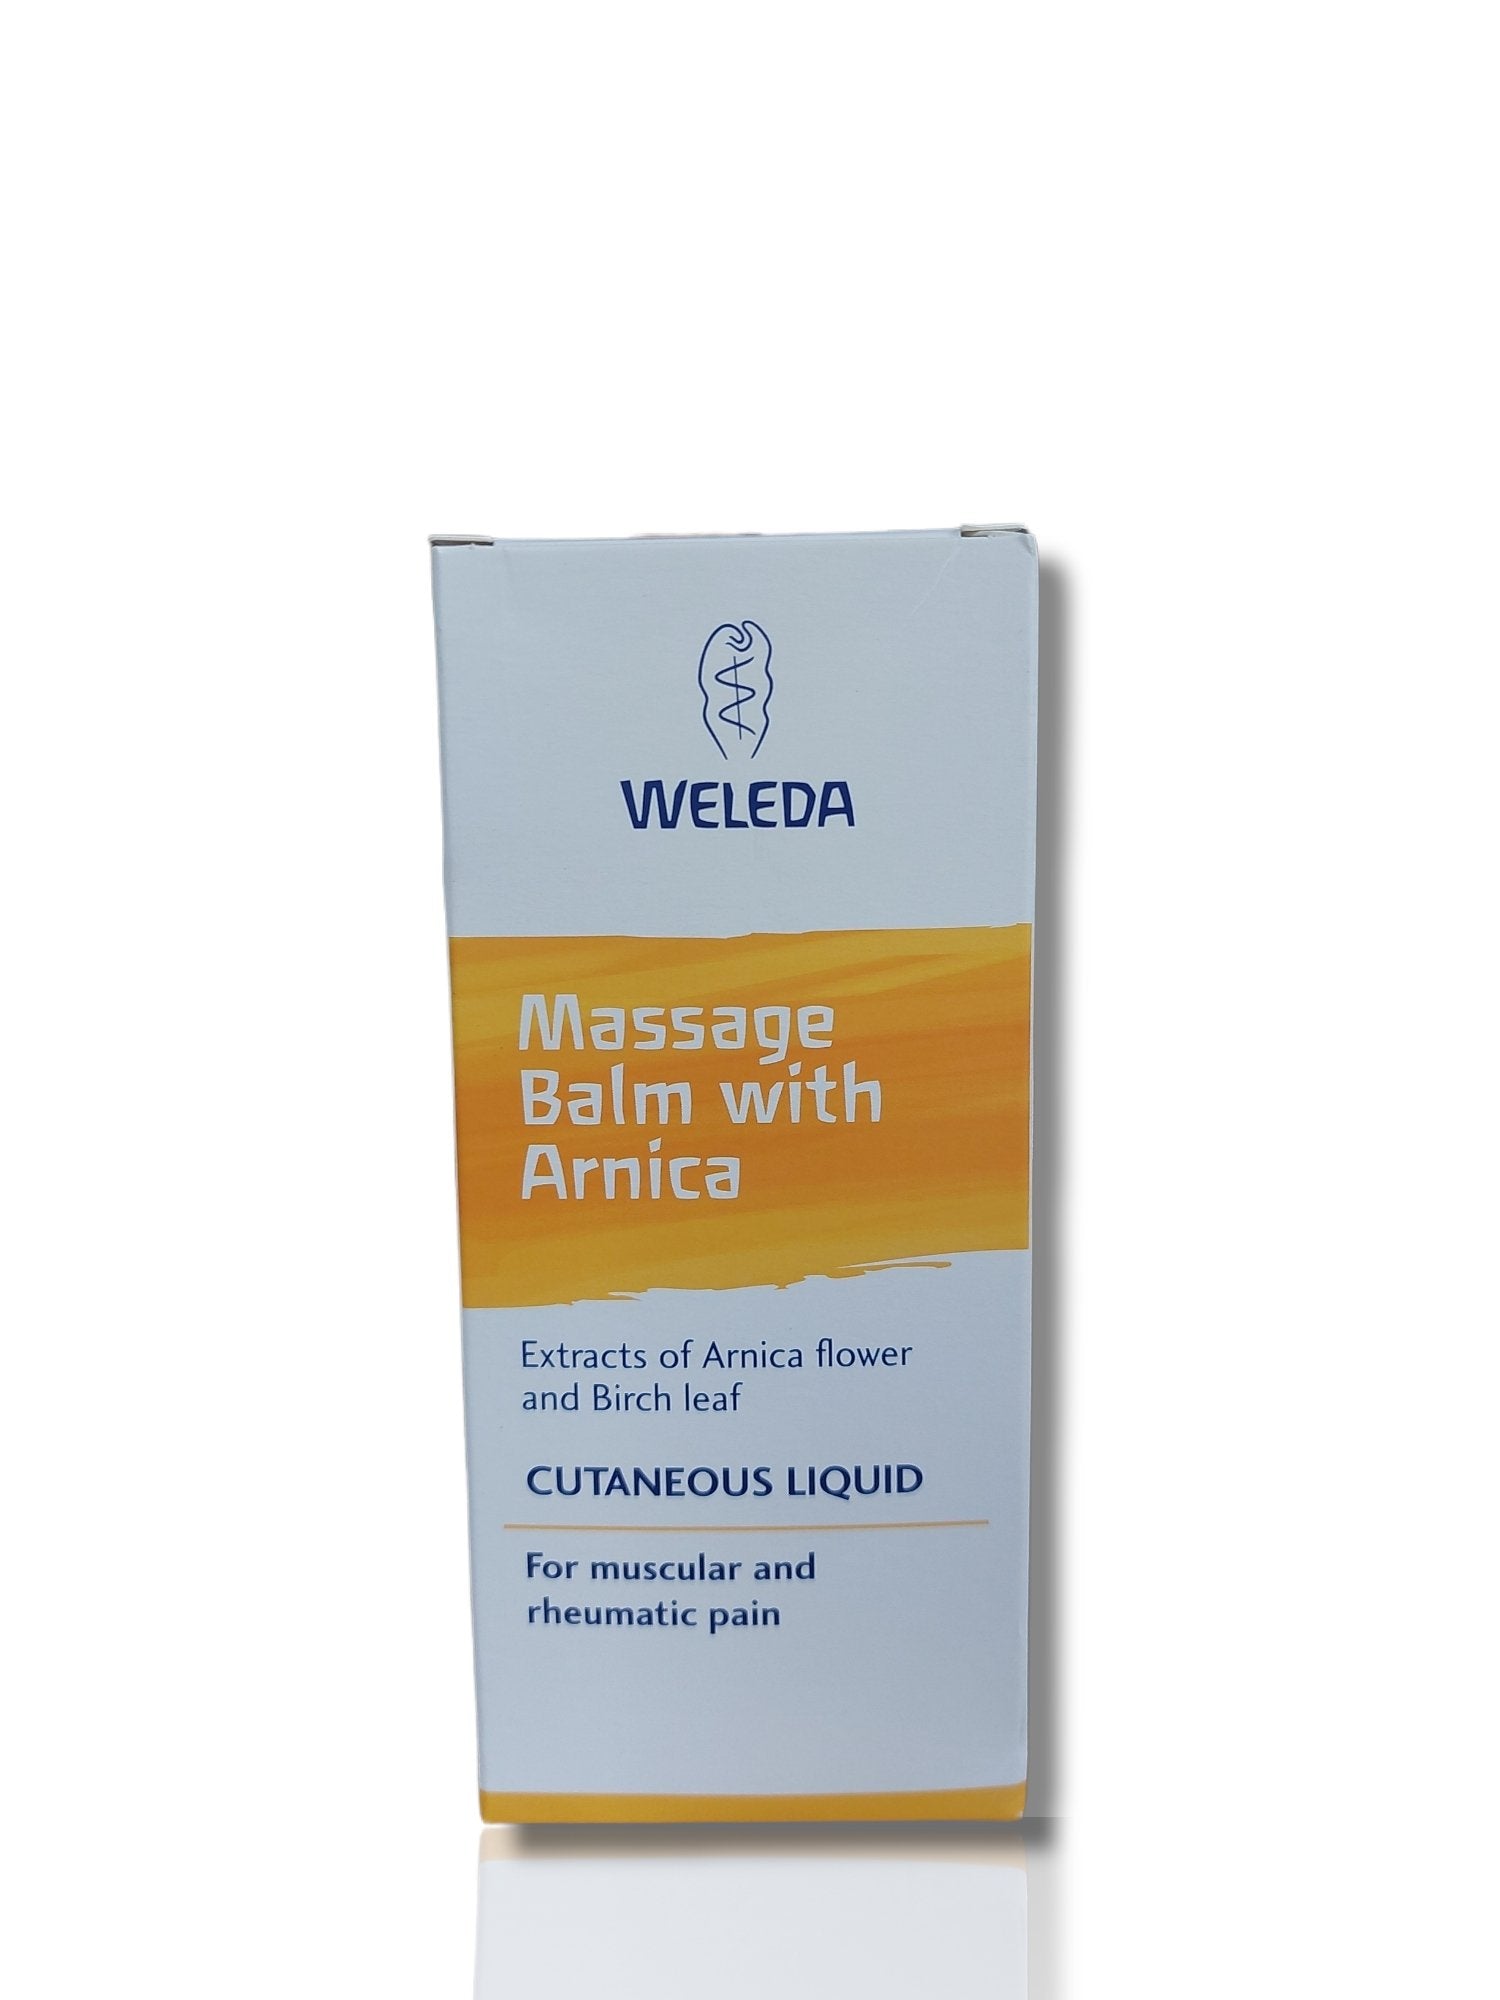 Weleda Massage Balm with Arnica - HealthyLiving.ie